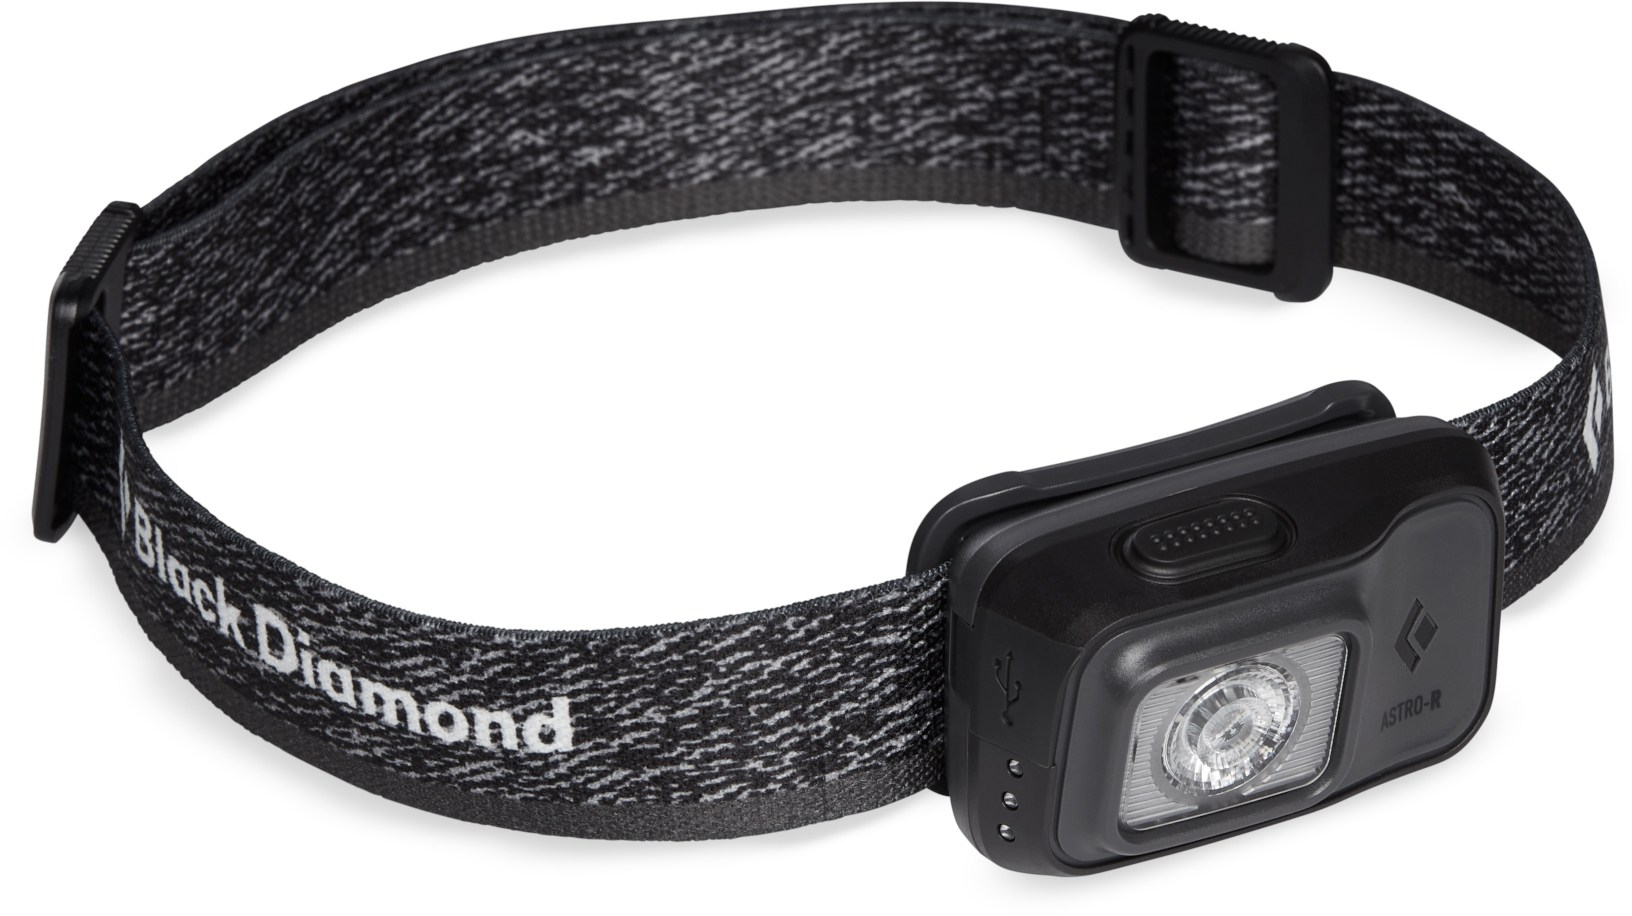 Налобный фонарь Astro 300-R Black Diamond, серый цена и фото